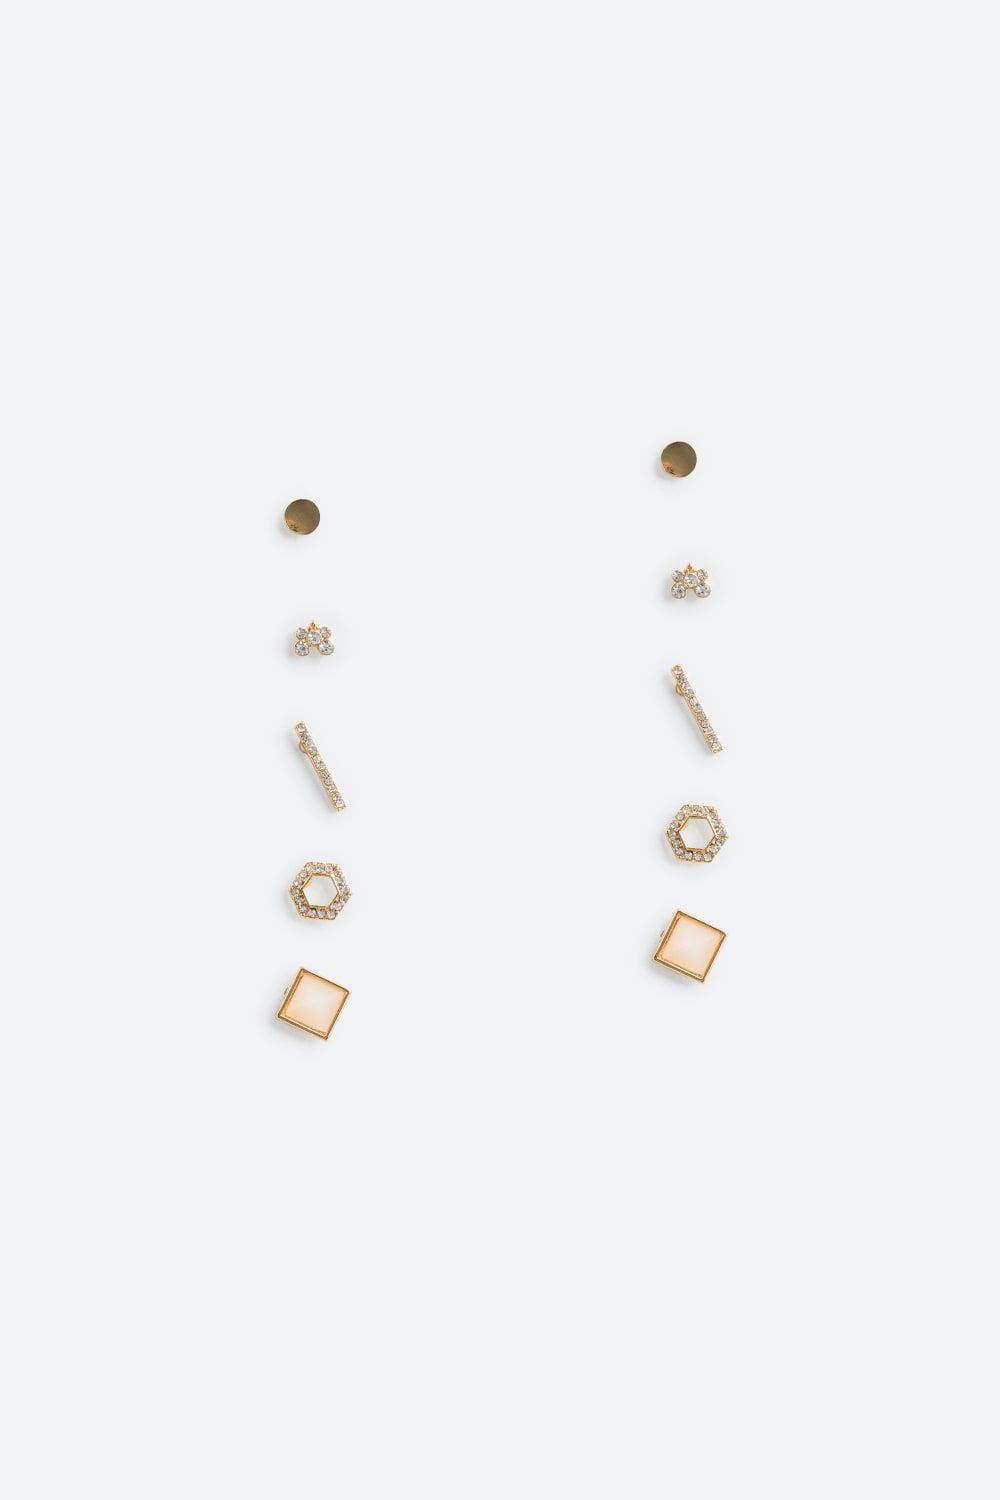 Five Piece Earring Set | Stitch Fix